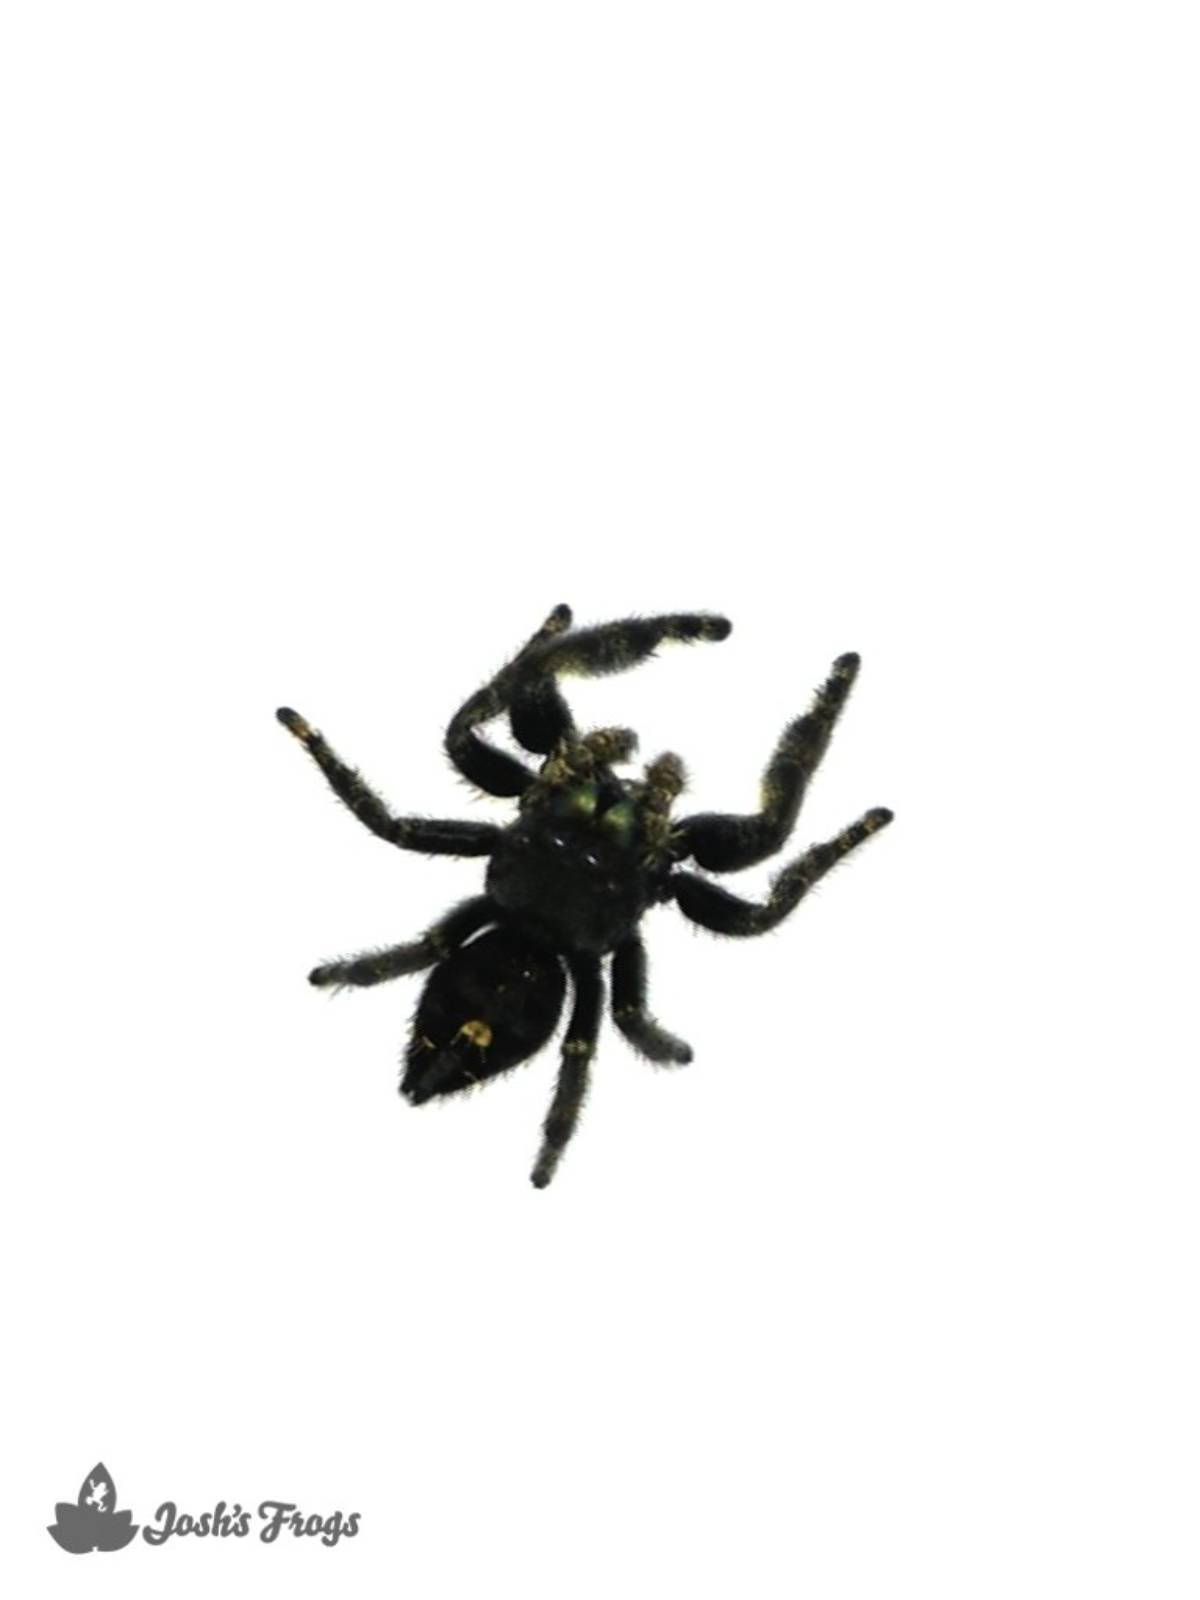 Bold Jumping Spider  Phidippus adax - 40% OFF